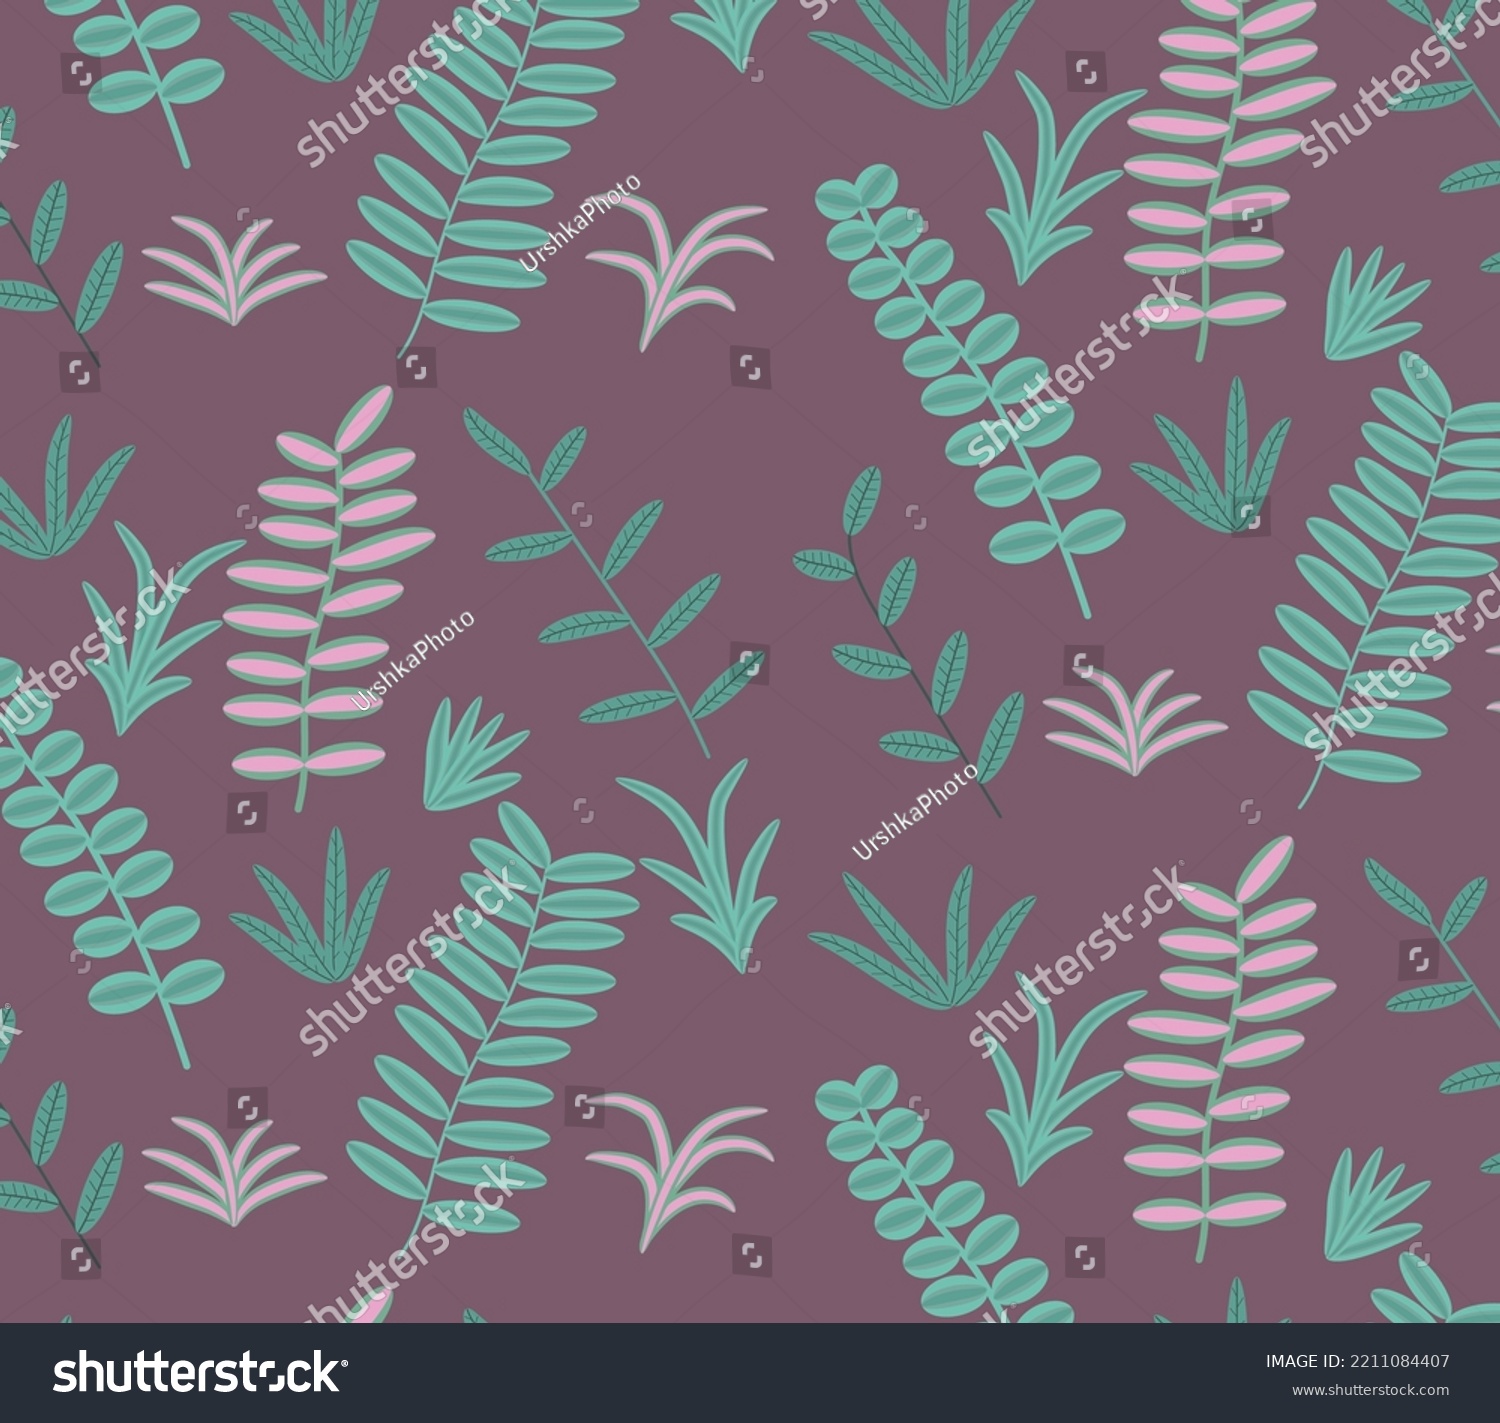 SVG of Seamless pattern green forest foliage leaves design cte background texture print vector illustrator svg